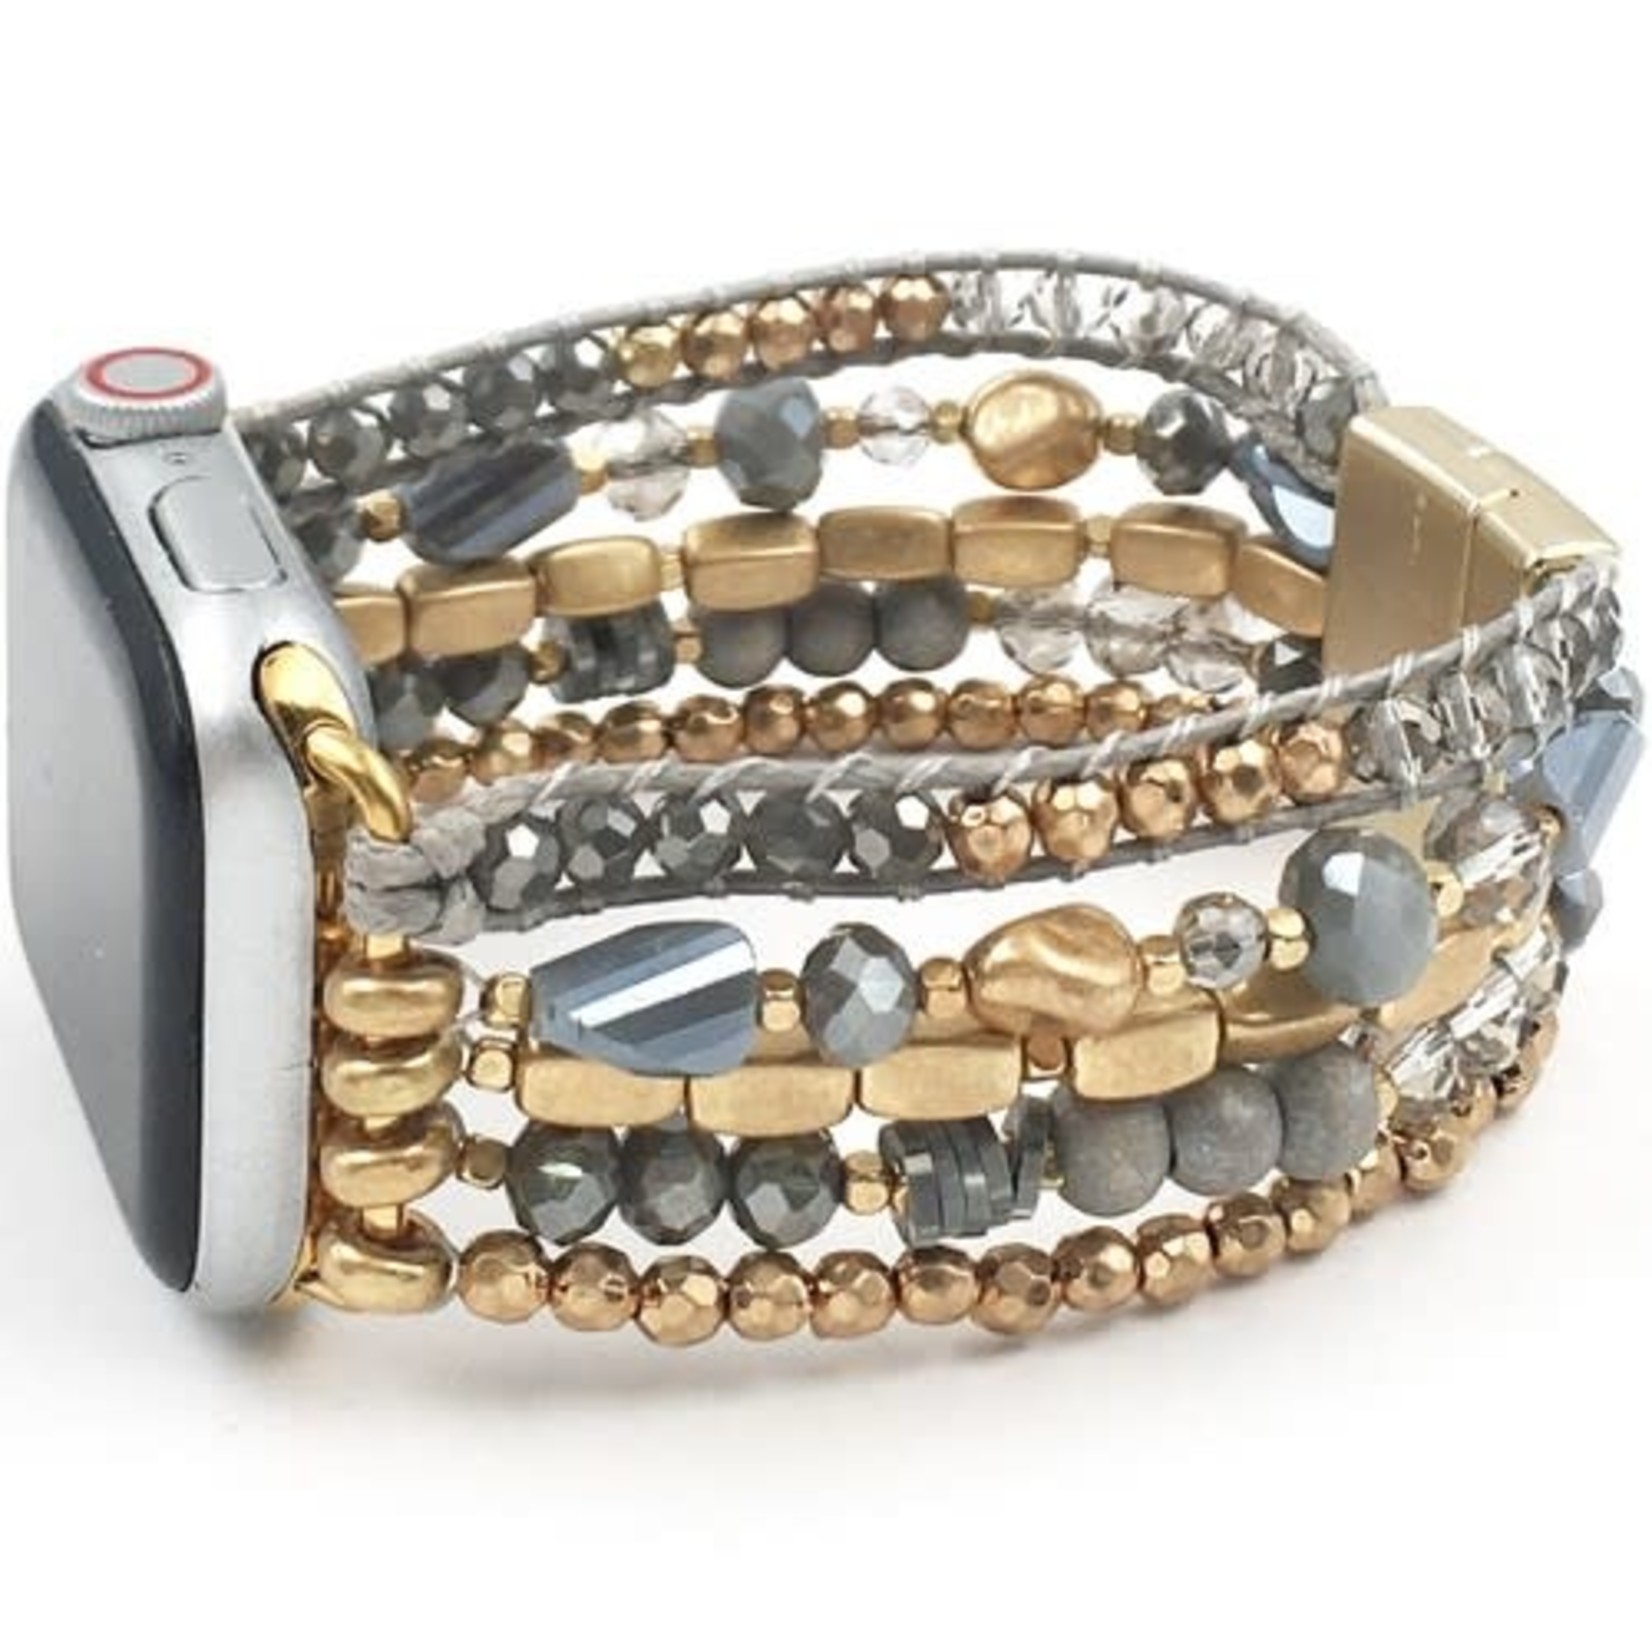 Blandice Jewelry Crystal Bead/Gemstone Apple Watch Band